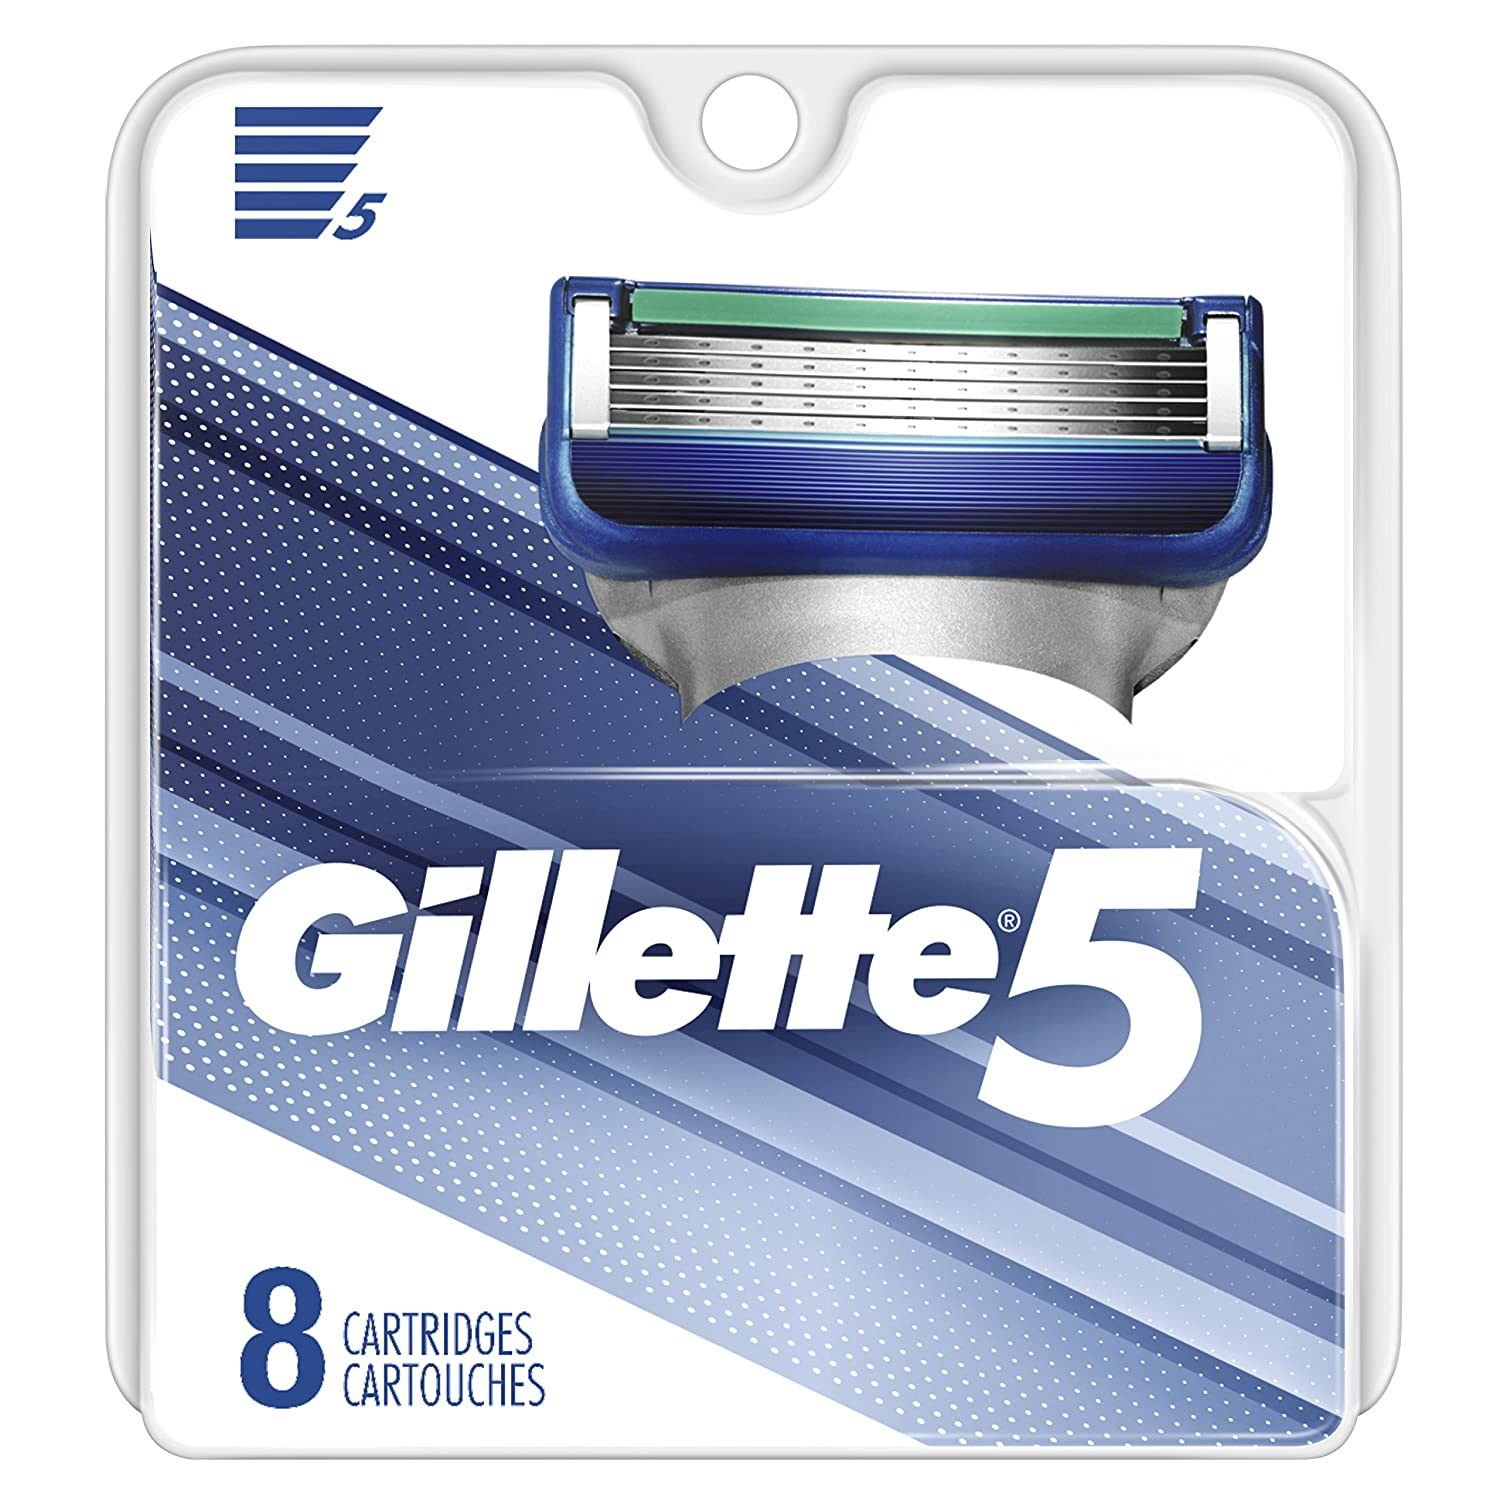 Gillette 5 Men’s Razor Blade Refills, 8 Count Only $9.87 Shipped ...